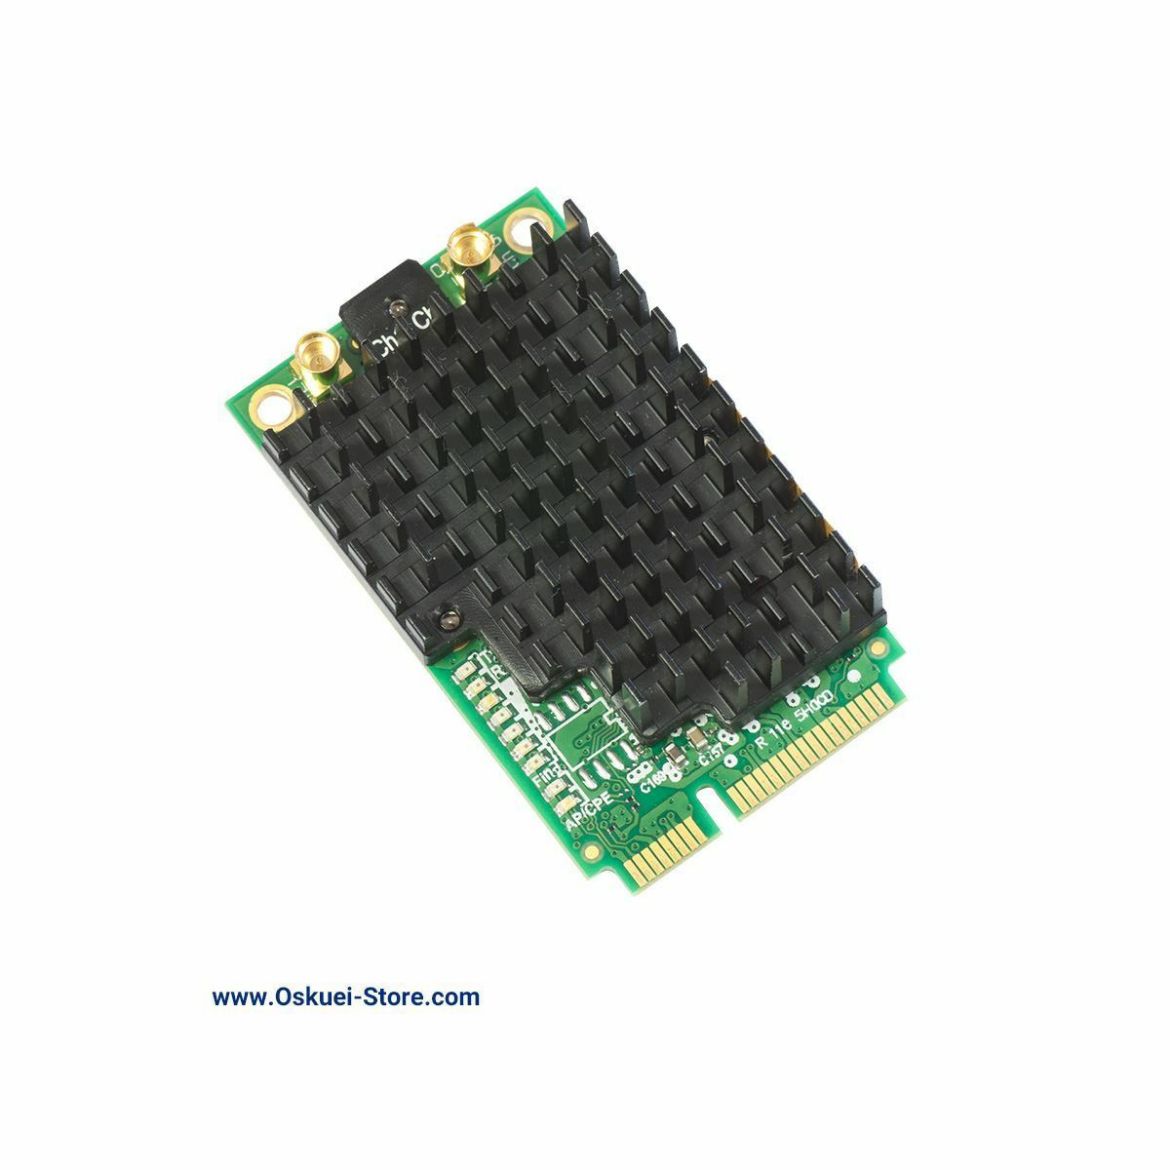 MikroTik R11e-5HacD Mini PCIe Wireless Card